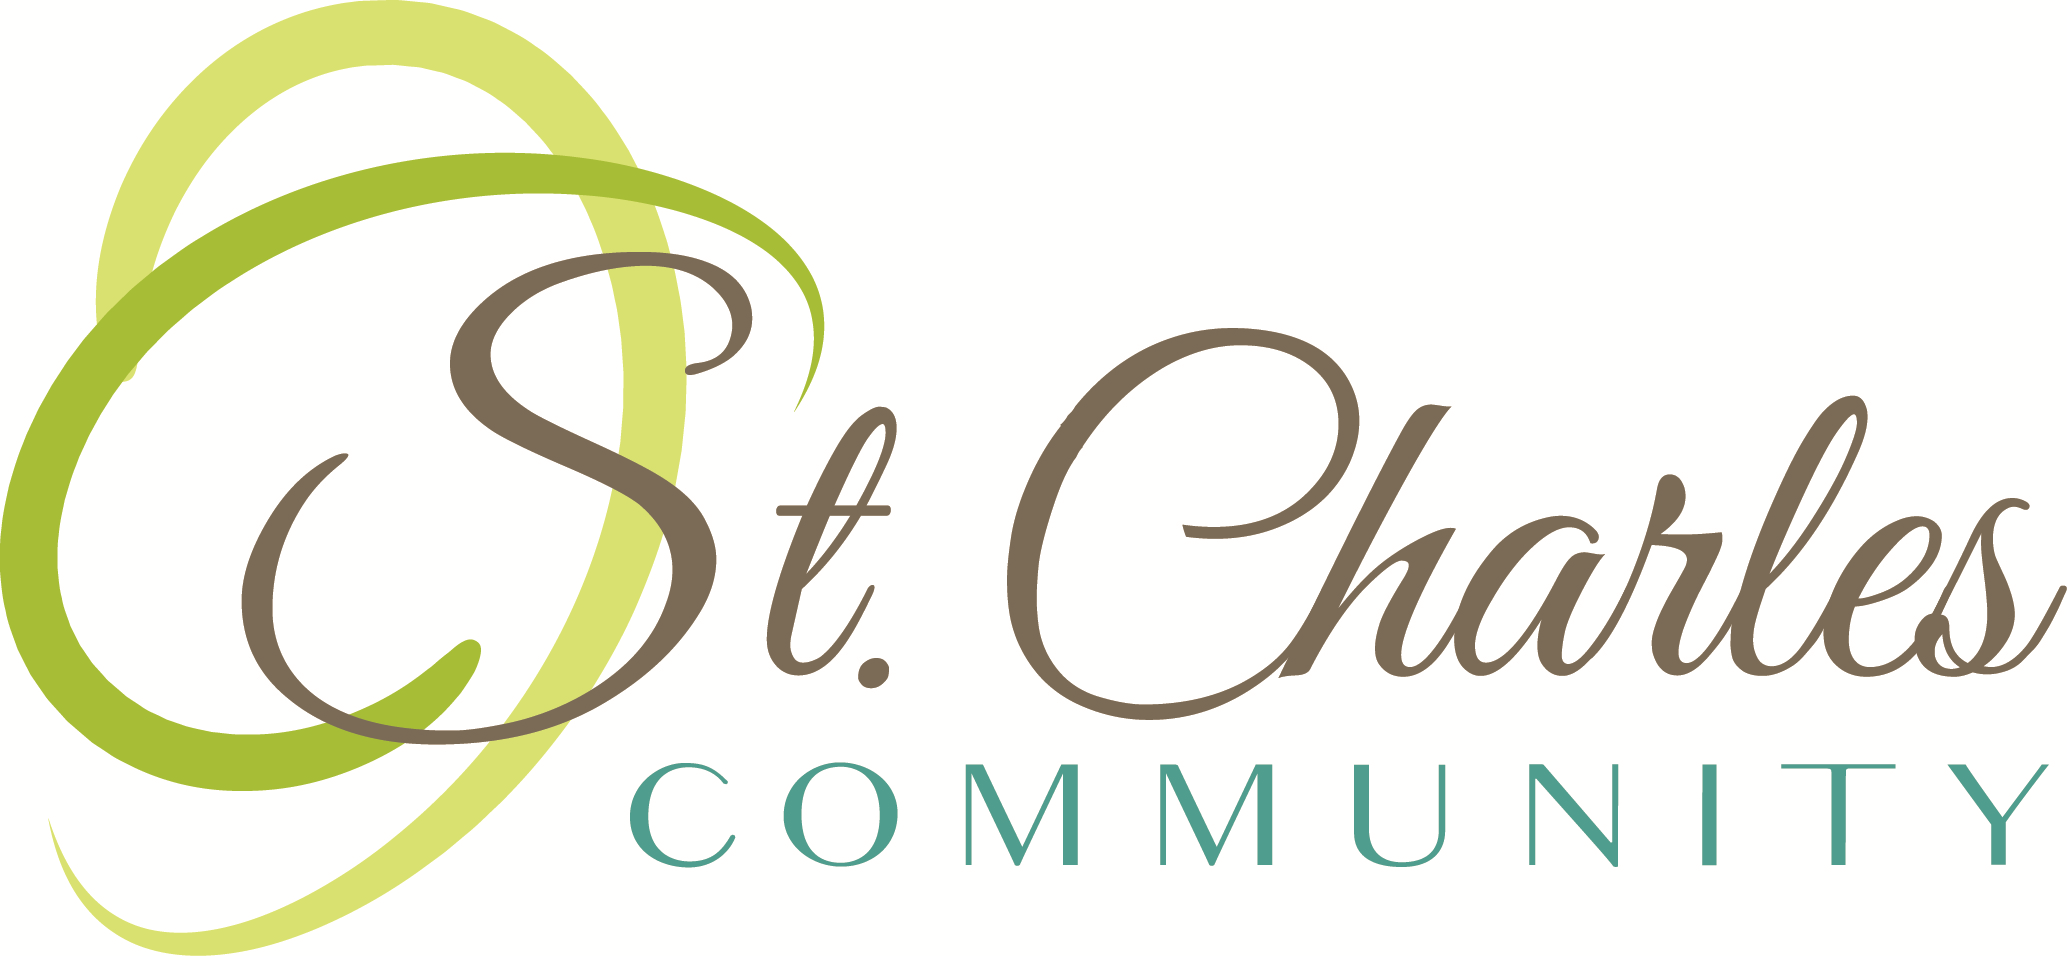 St. Charles Community Company Logo